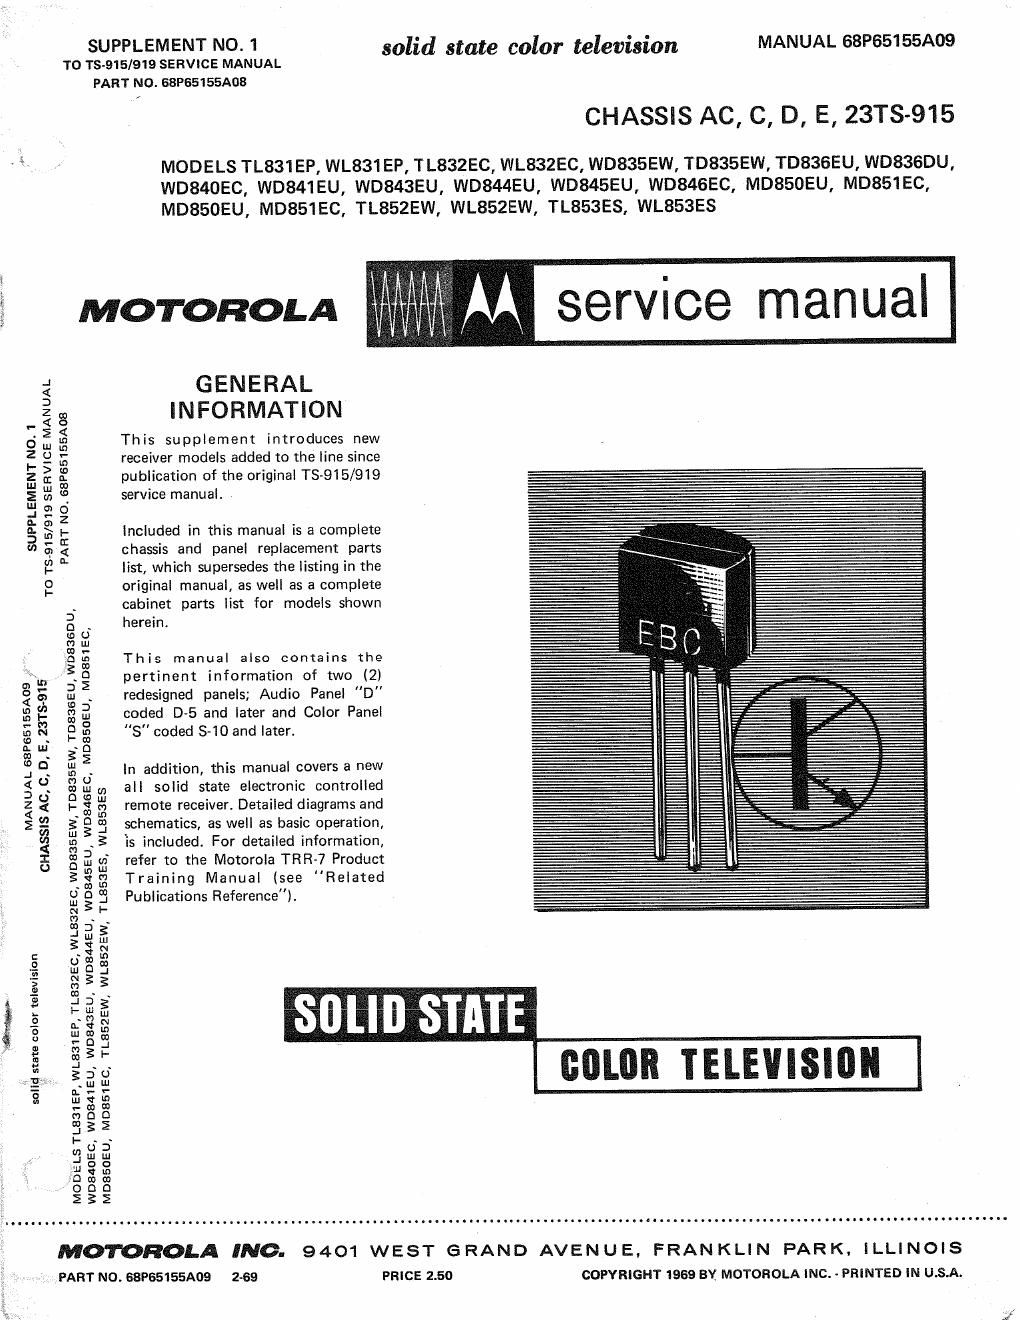 motorola wd 836 du service manual